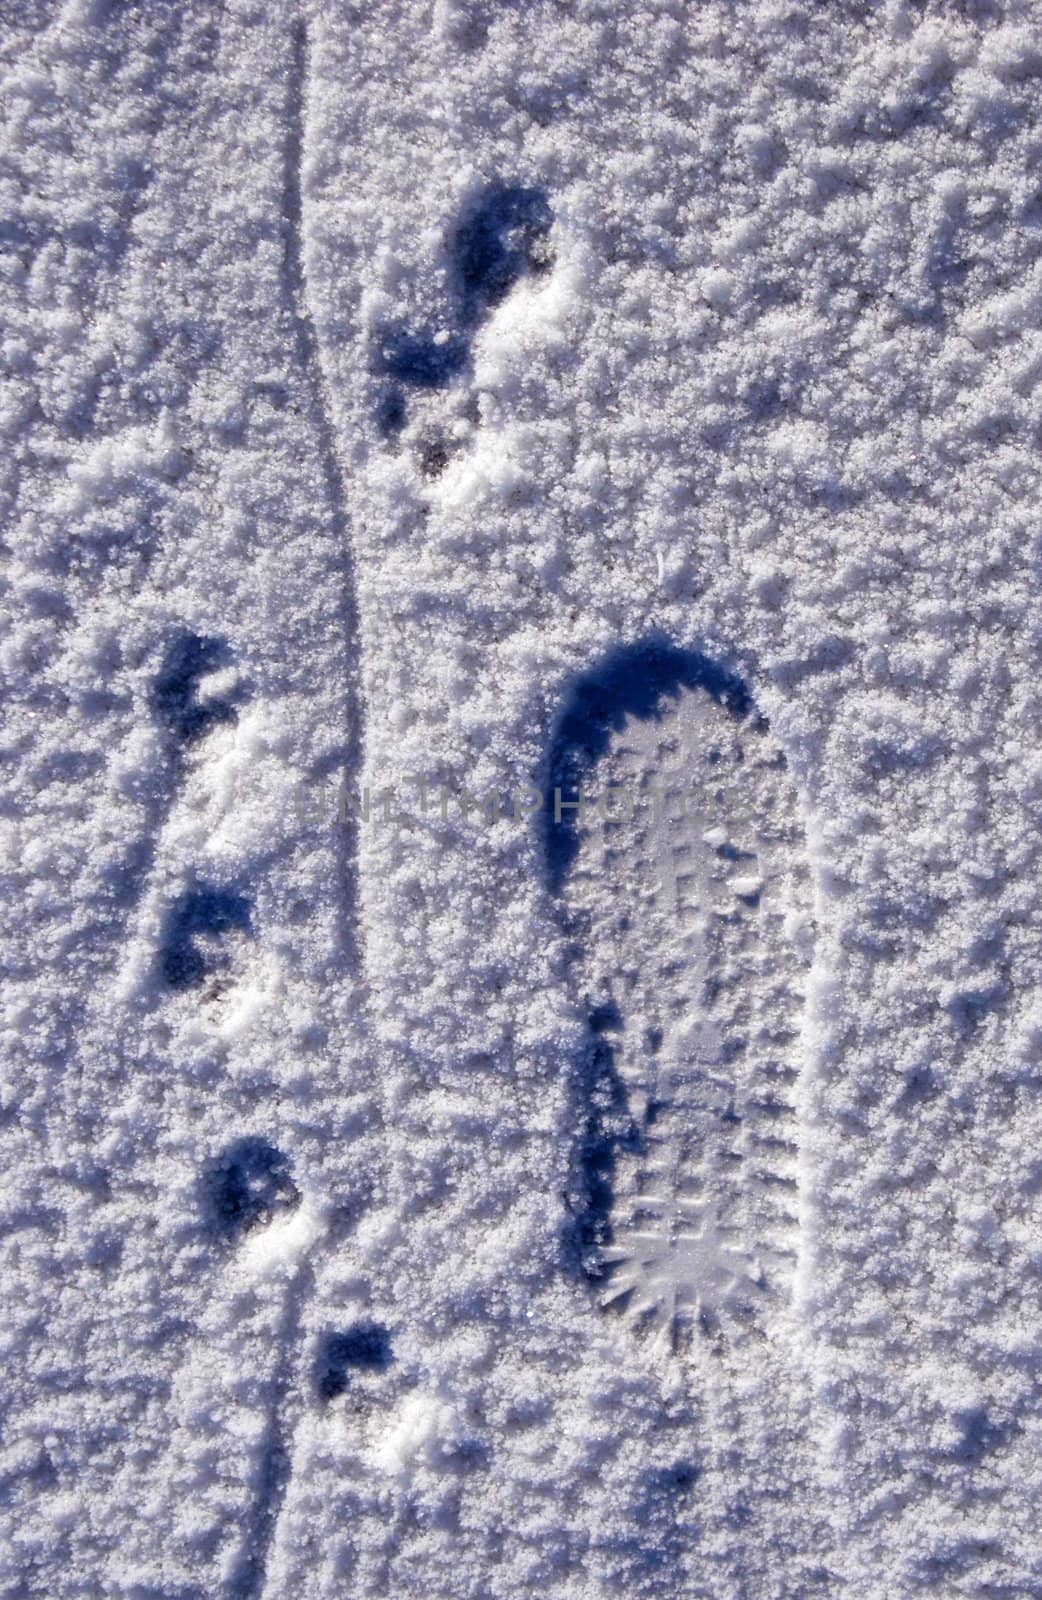 Traces on snow by sauletas